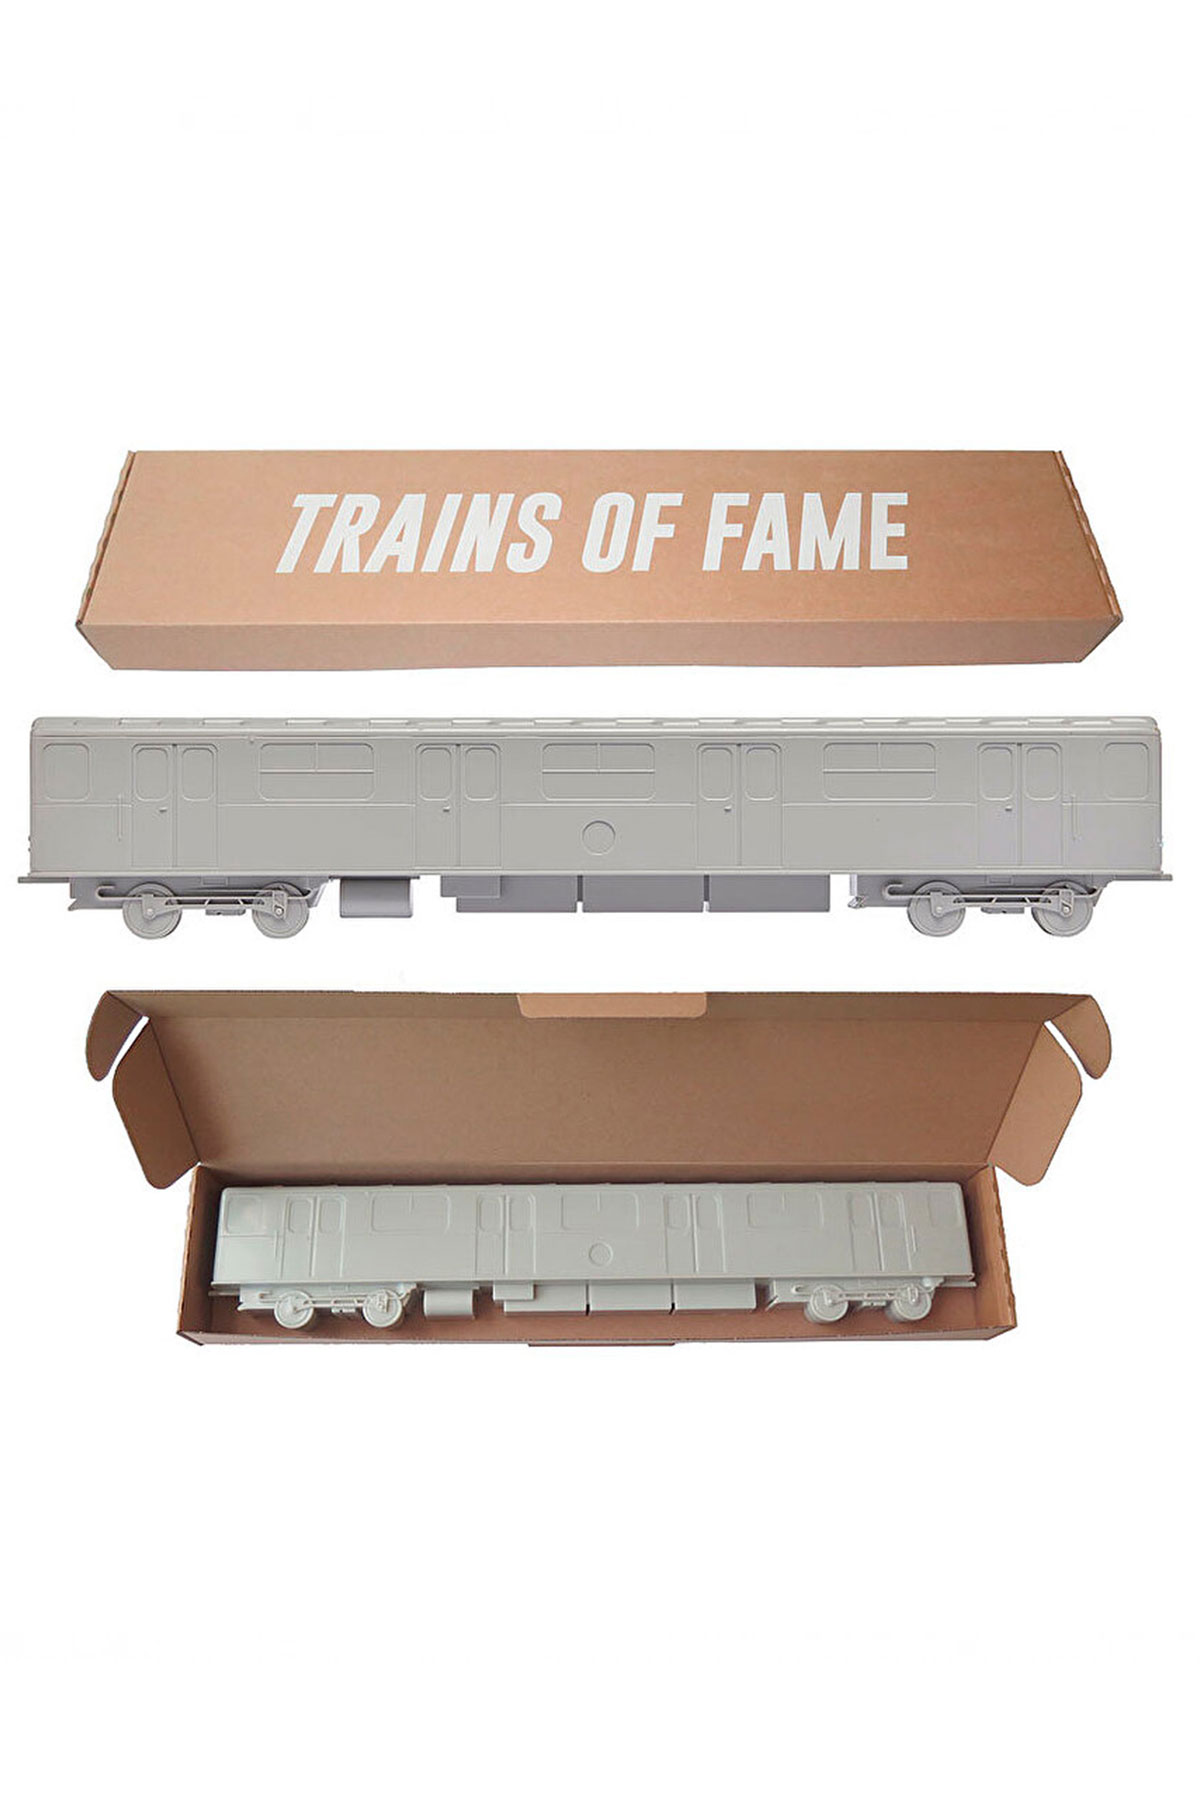 TRAINS OF FAME - Train model